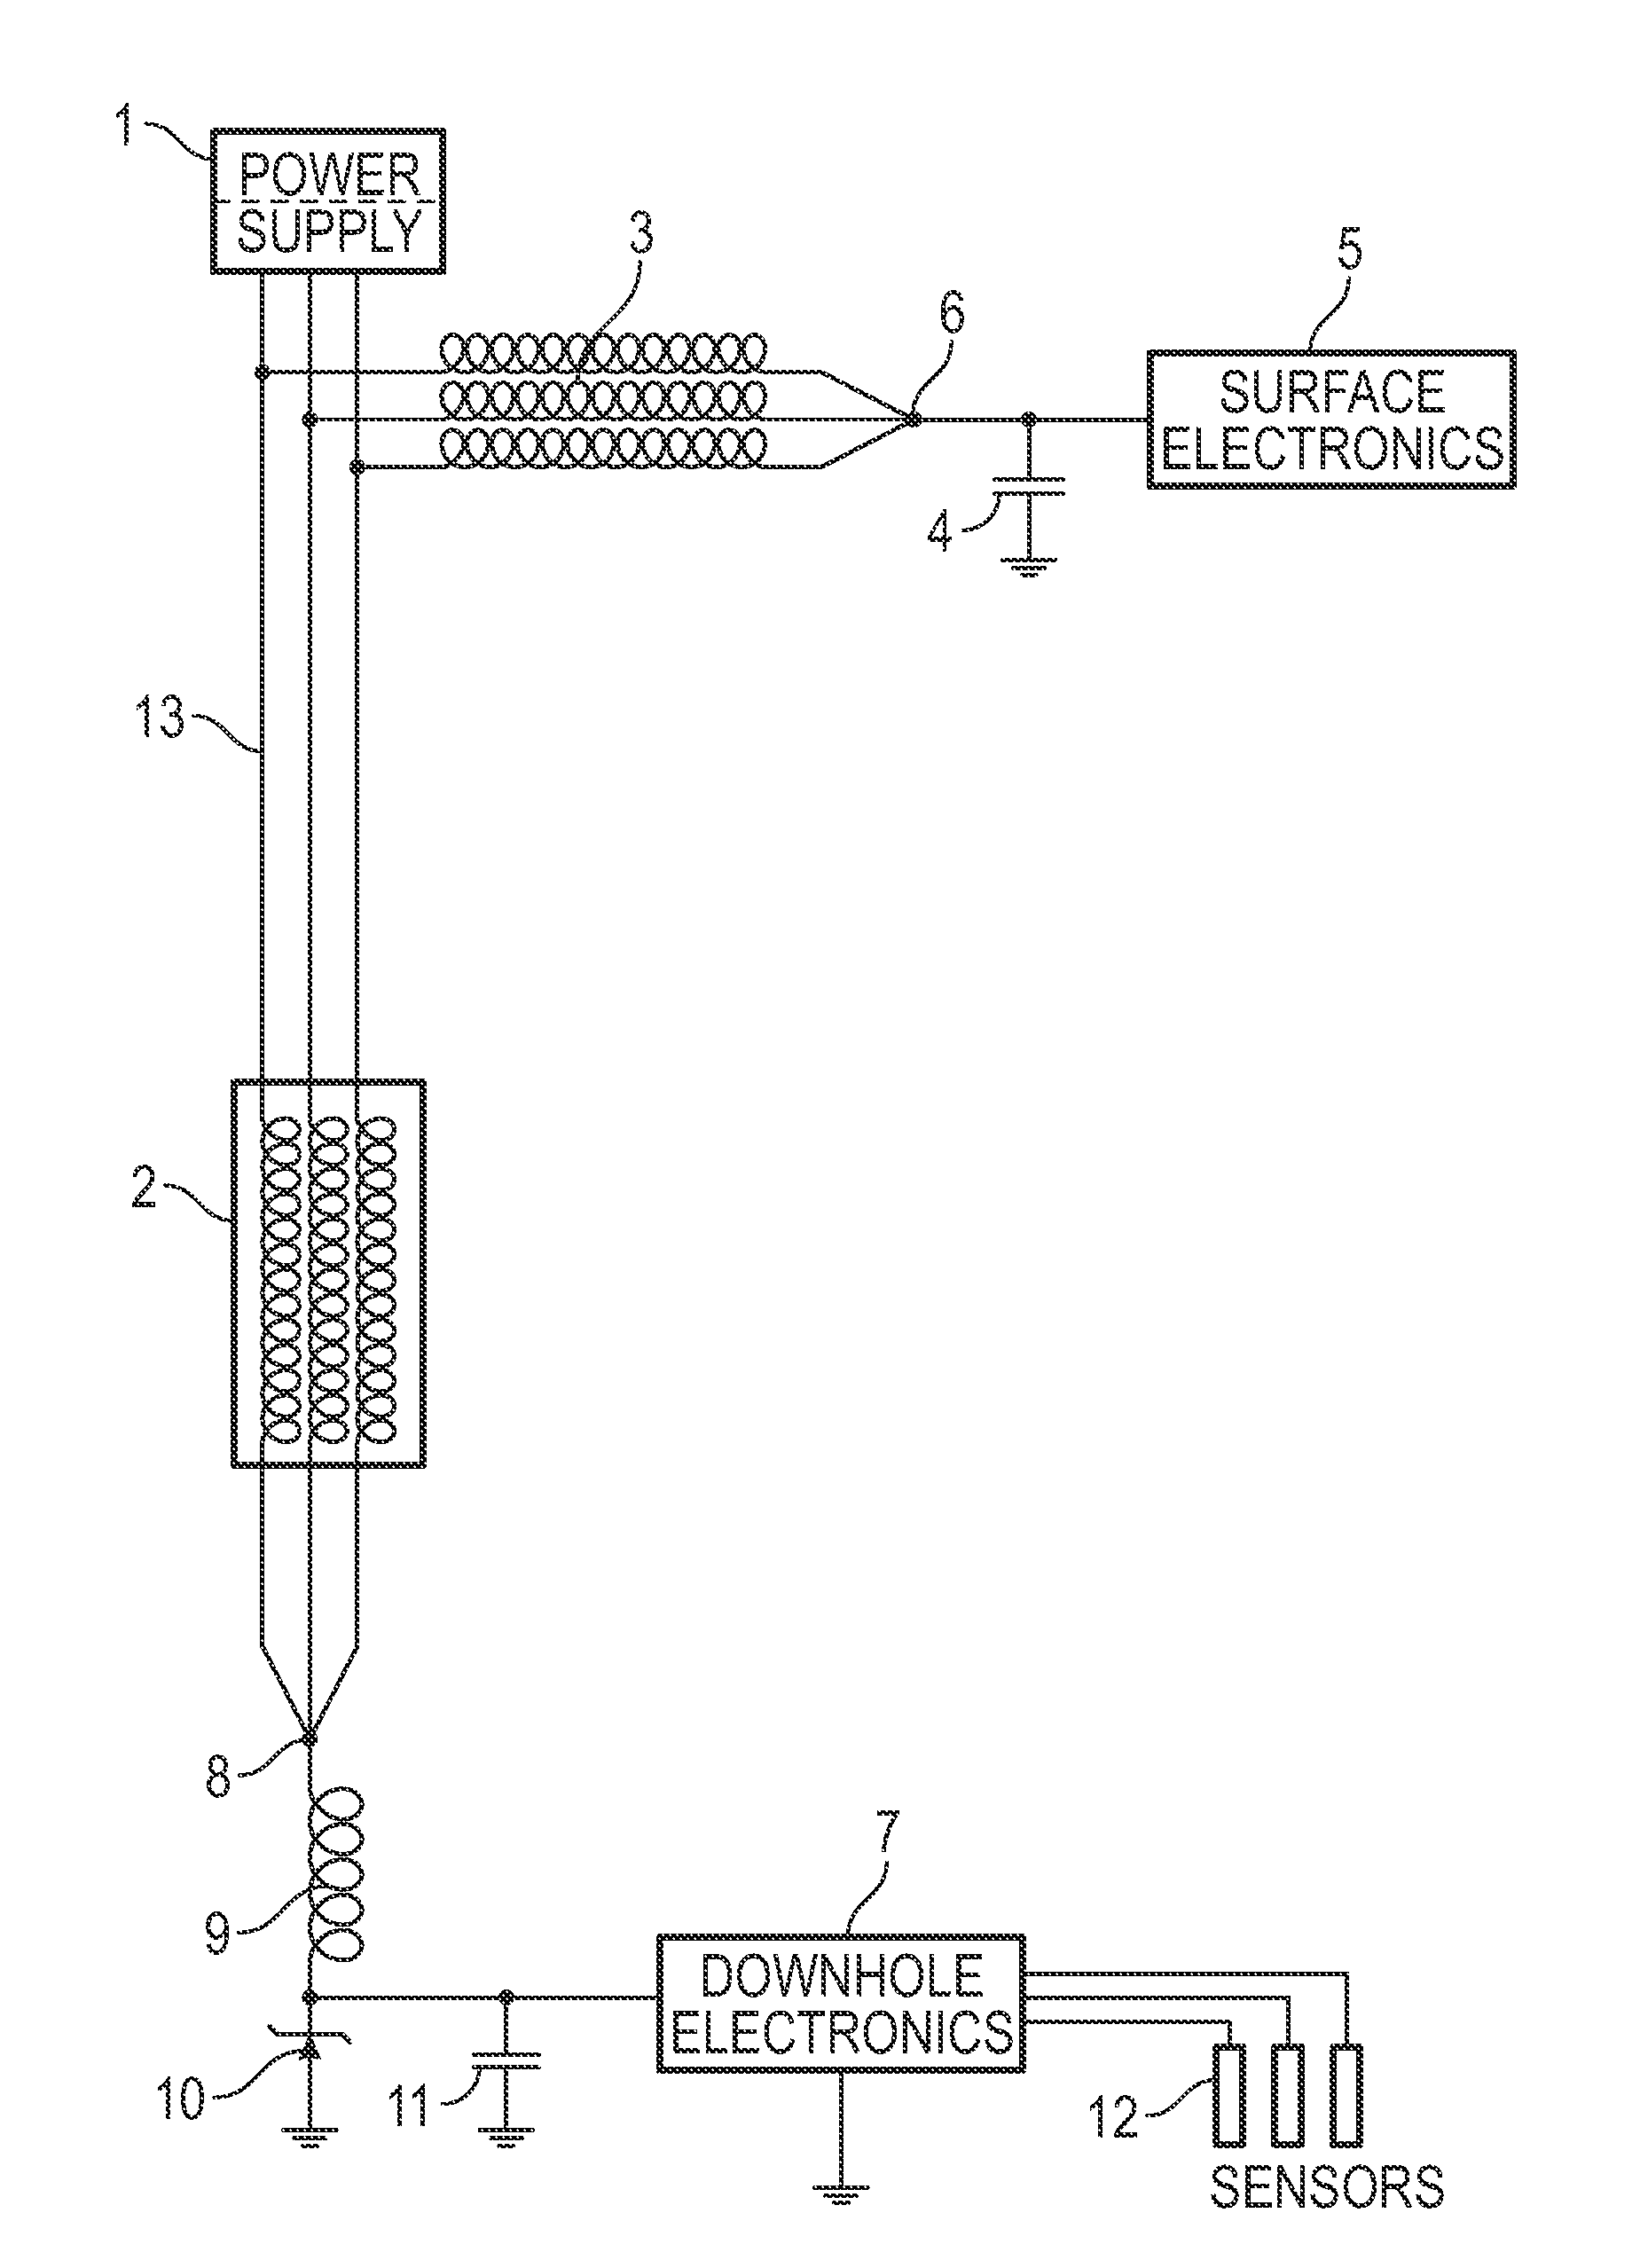 Signalling method and apparatus